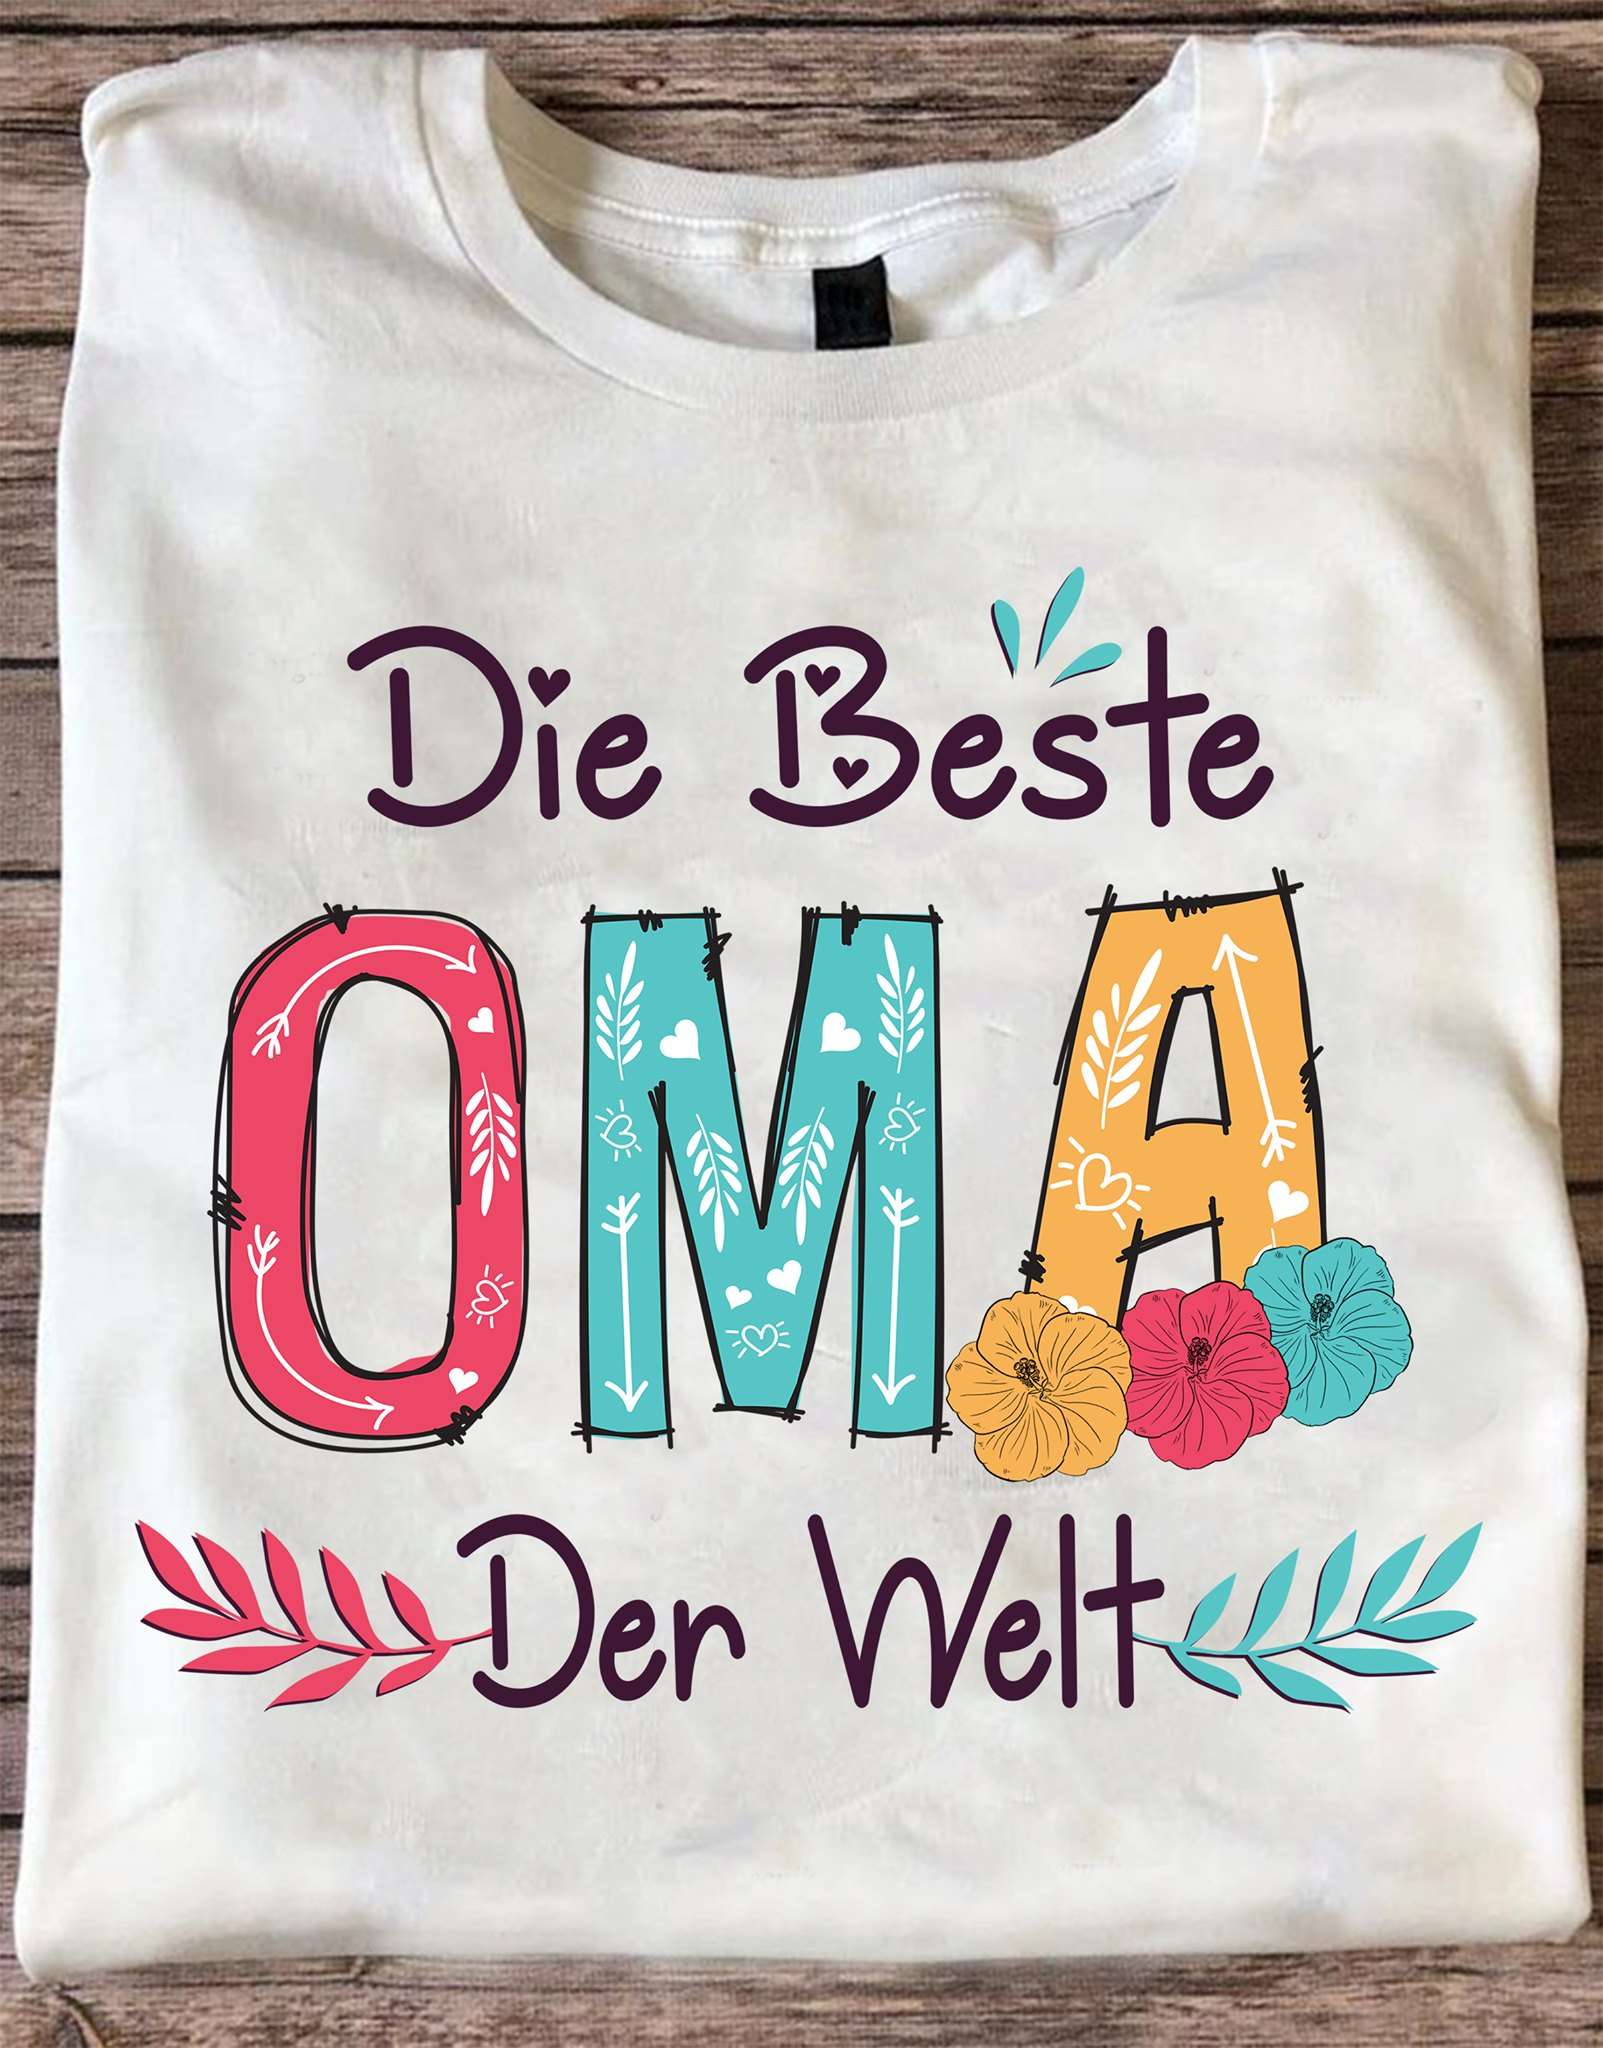 Die beste Oma der welt - Oma grandma title, T-shirt for grandma